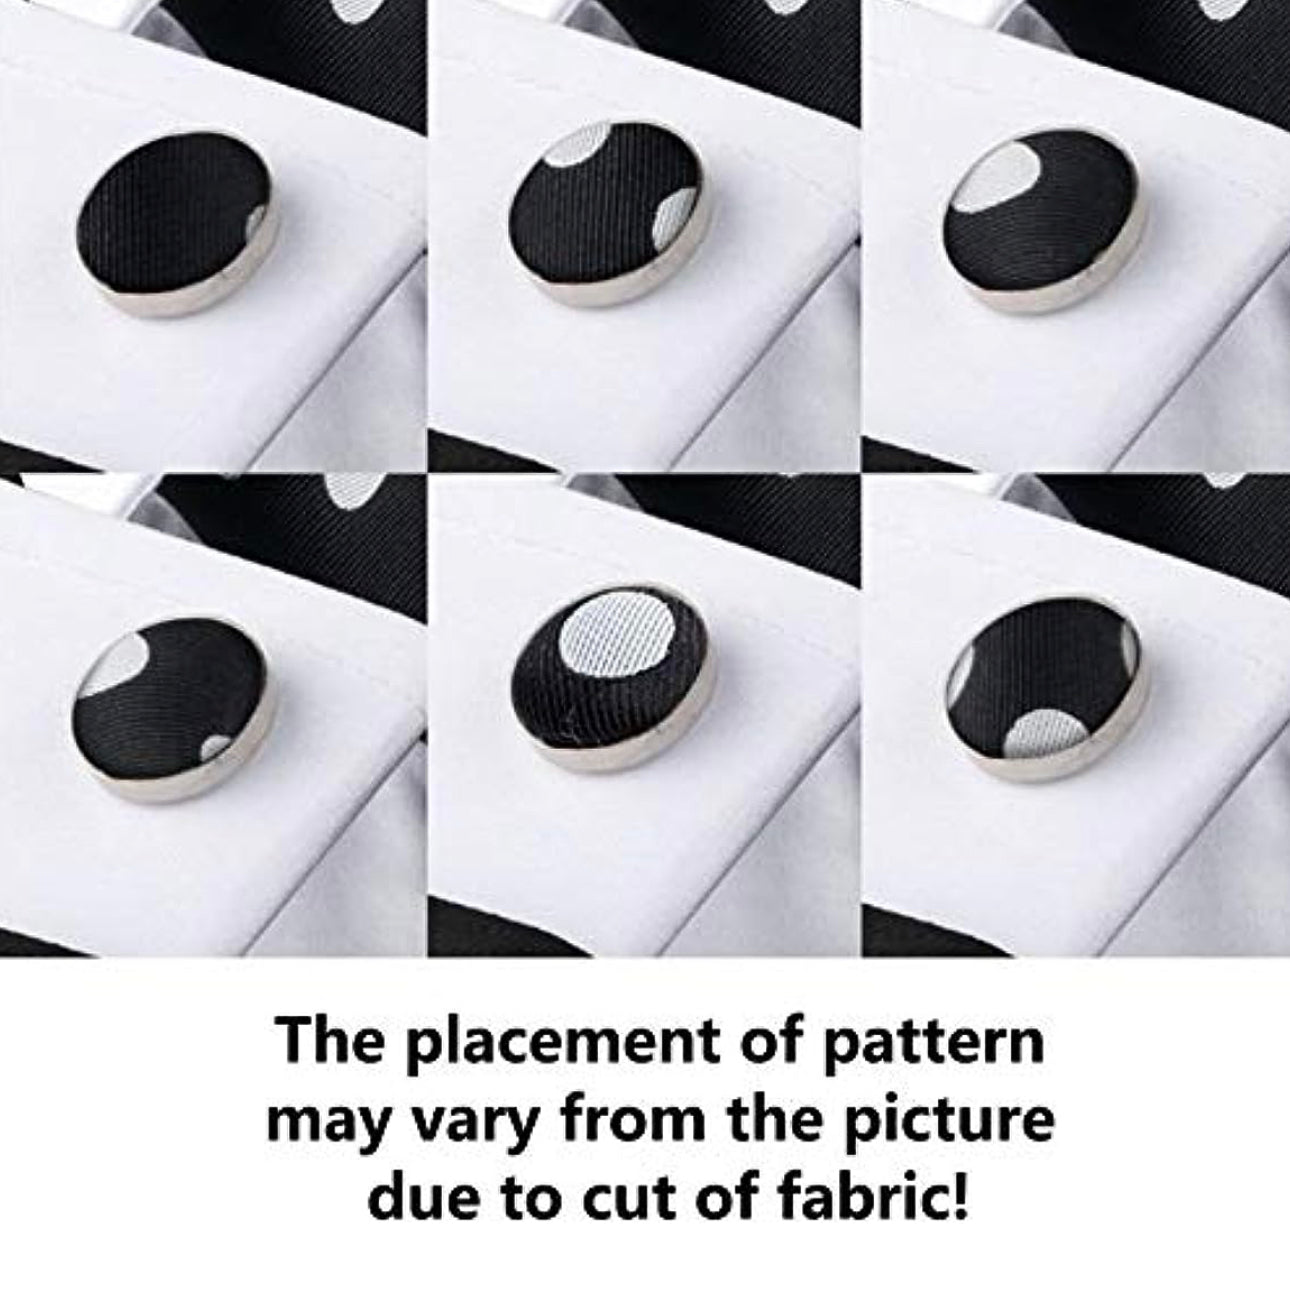 Men’s Silk Coordinated Black Bow Tie Set -  Silver Polka Dots